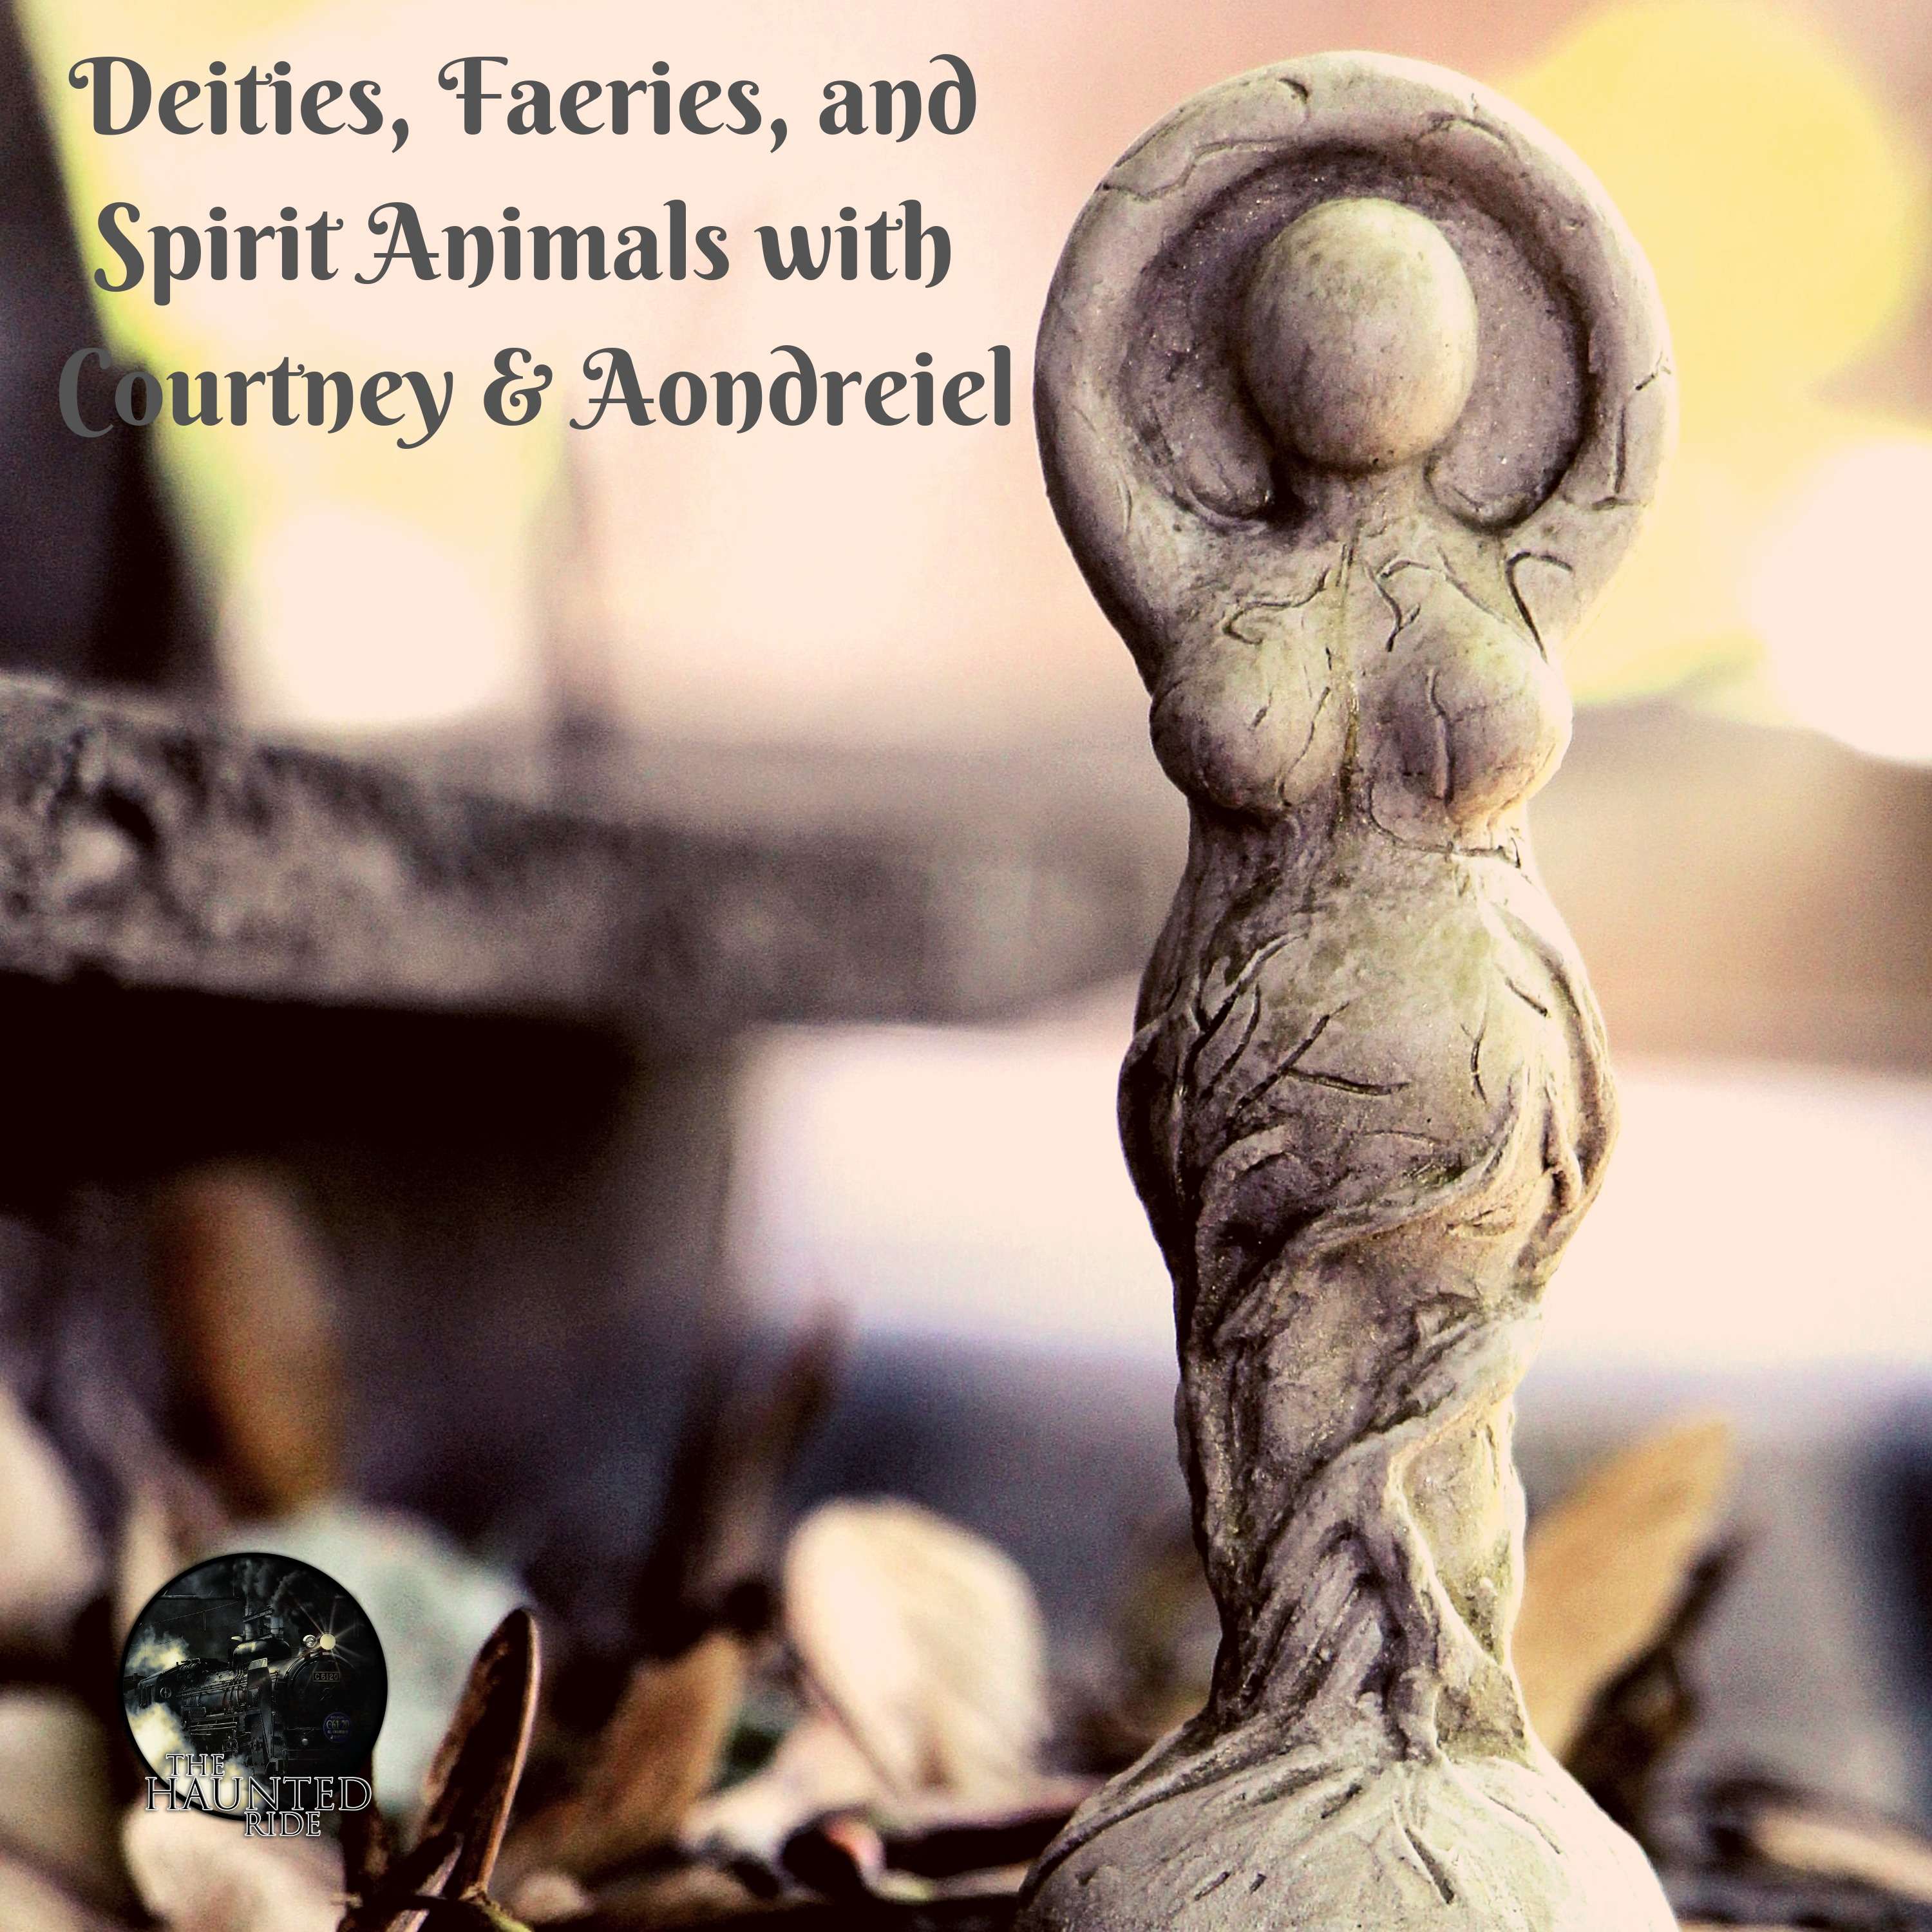 22: Deities, Faeries, and Spirit Animals with Courtney and Aondreiel